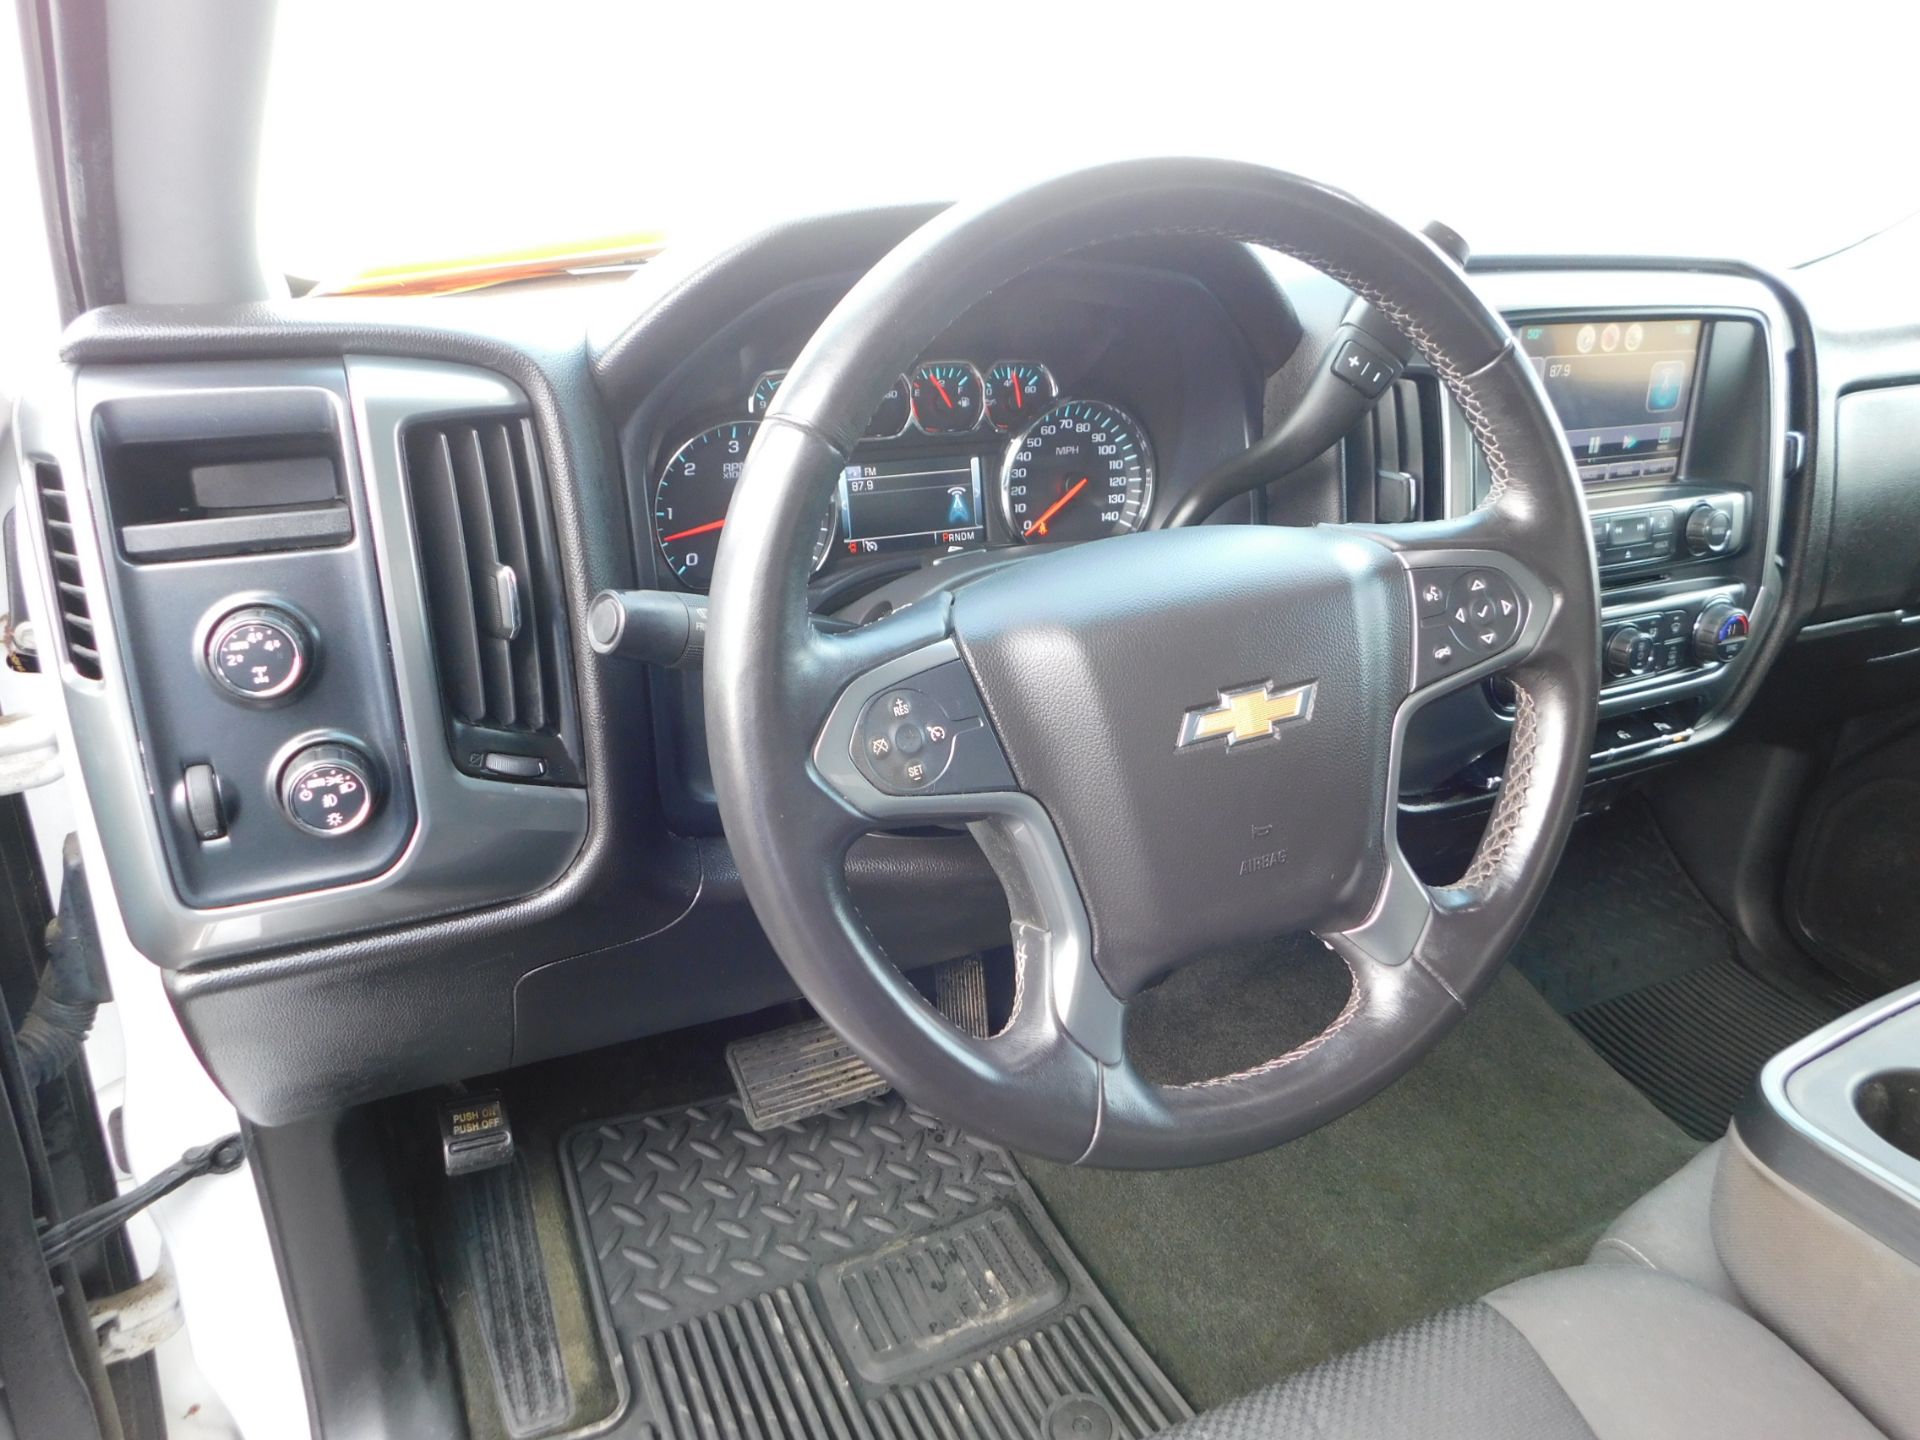 2014 Chevrolet Silverado LT Pickup, VIN 1GCVKREC3EZ139405, 4-Door 4 WD, Automatic, AM/FM, AC, Cruise - Image 27 of 51